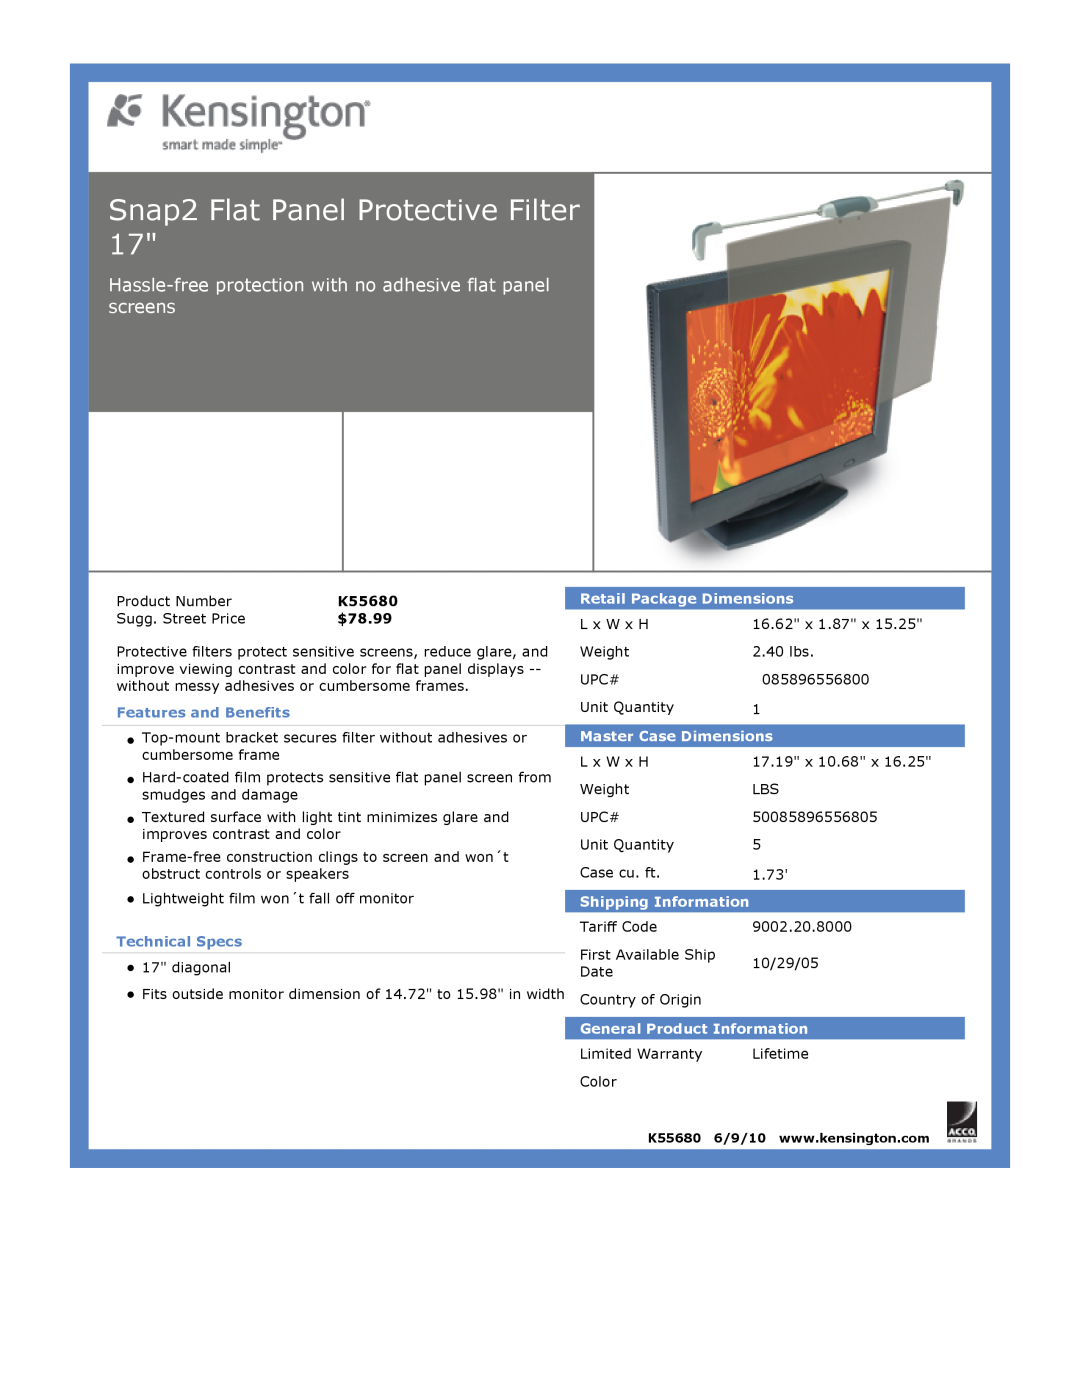 Kensington EU64325 dimensions $78.99, Snap2 Flat Panel Protective Filter, Features and Benefits, Technical Specs 